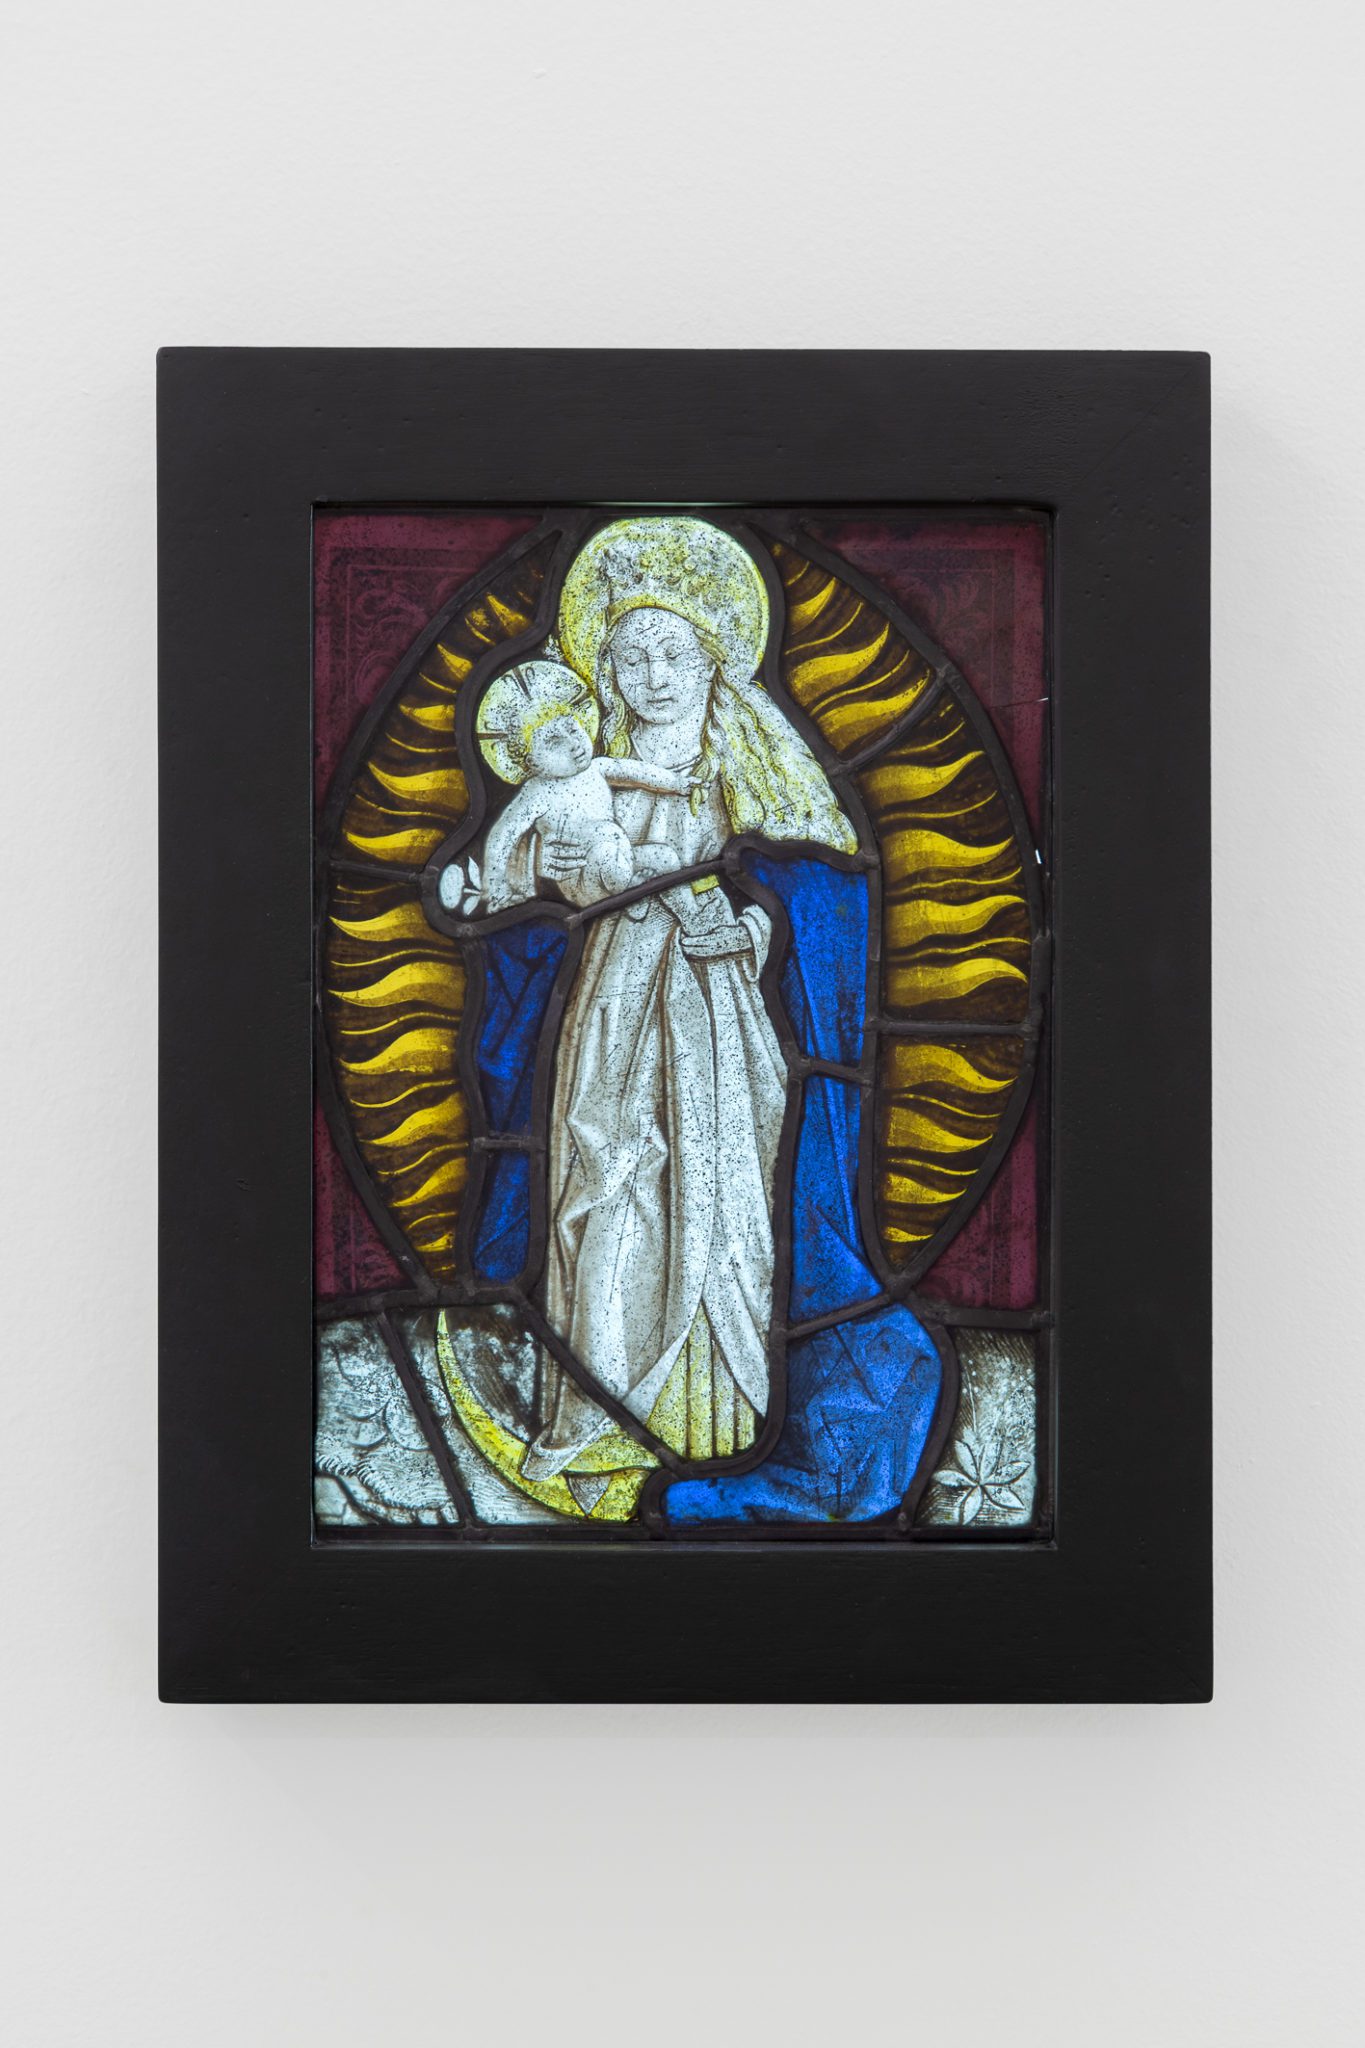 Artist unknown, Flemish Stained glass, c. late 15th century, 27 x 20 cm, Australian Catholic University Art Collection, acquired 2017, Courtesy of ACU University © ACU University